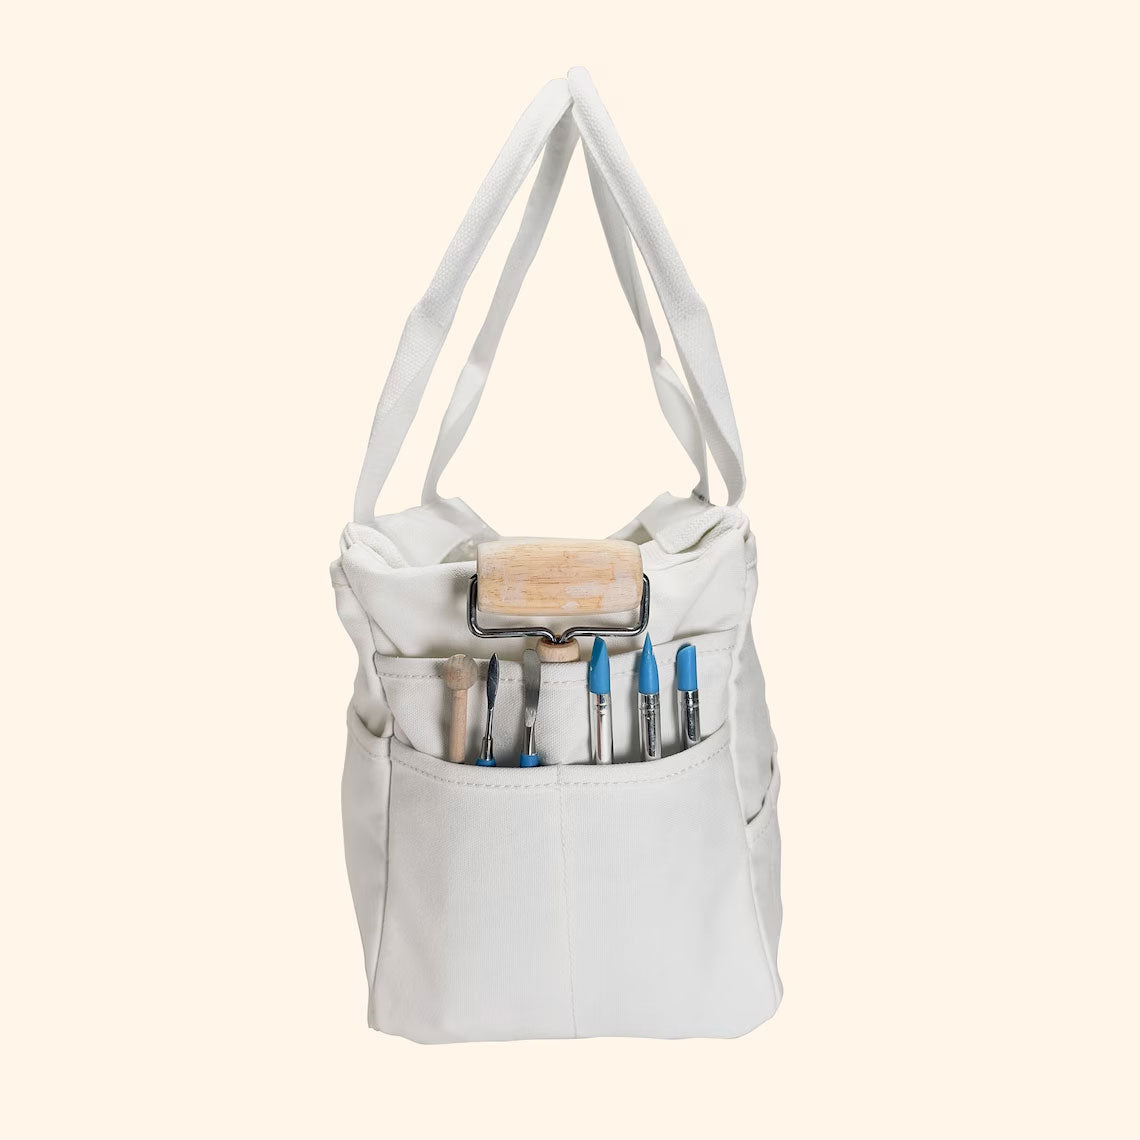 Soolla Studio Art Supply Bag - Aquamarine